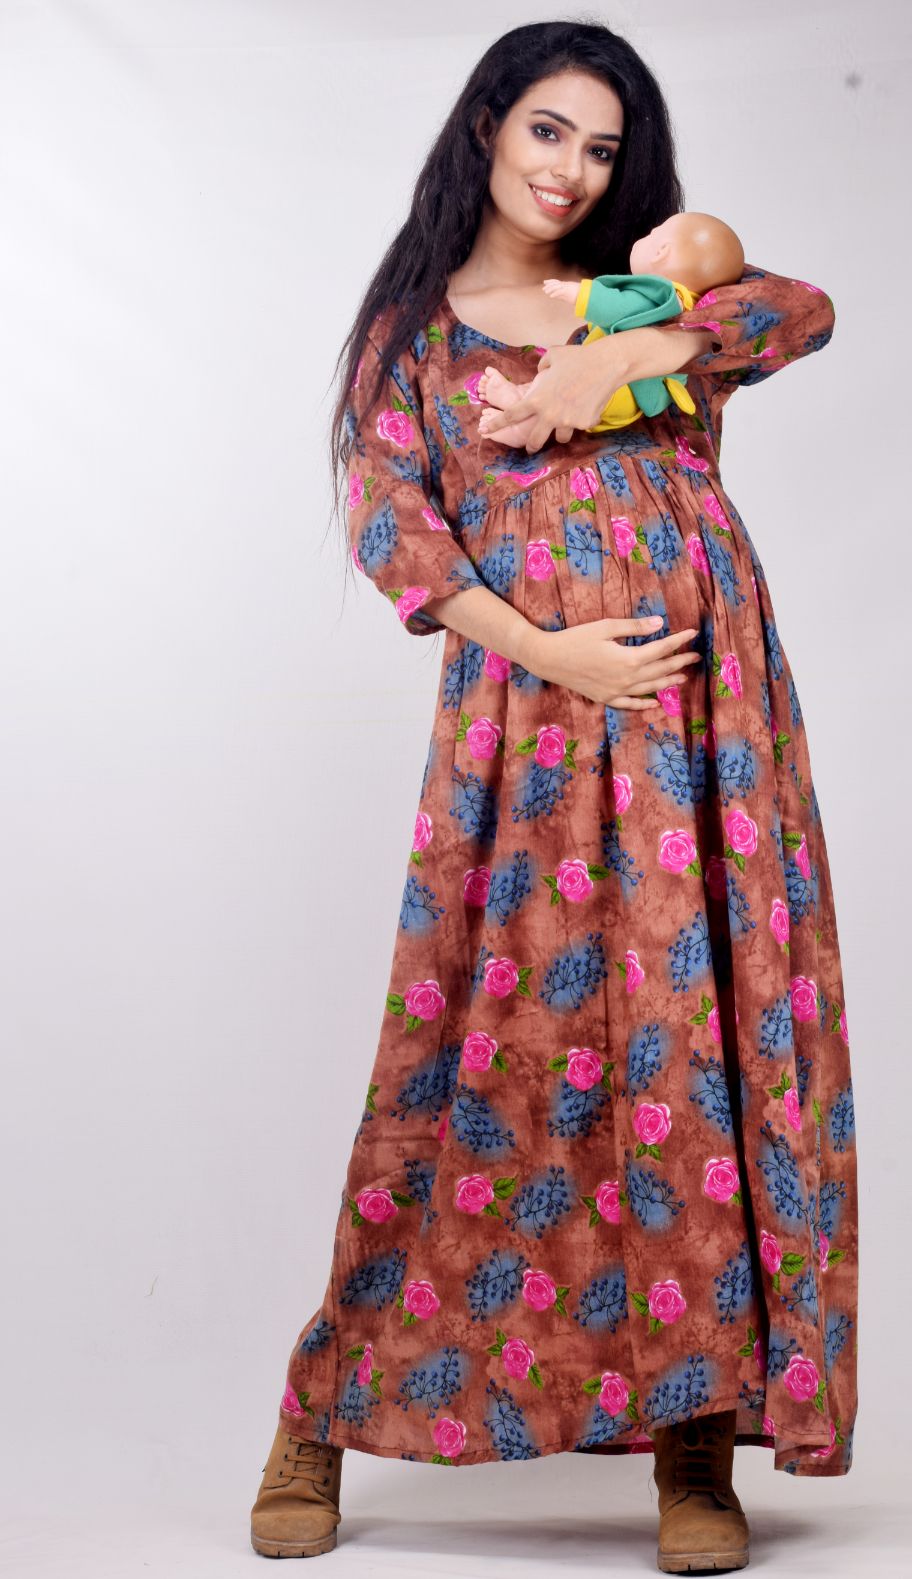 maternity gowns for photoshoot india - Iwearmystyle - Medium